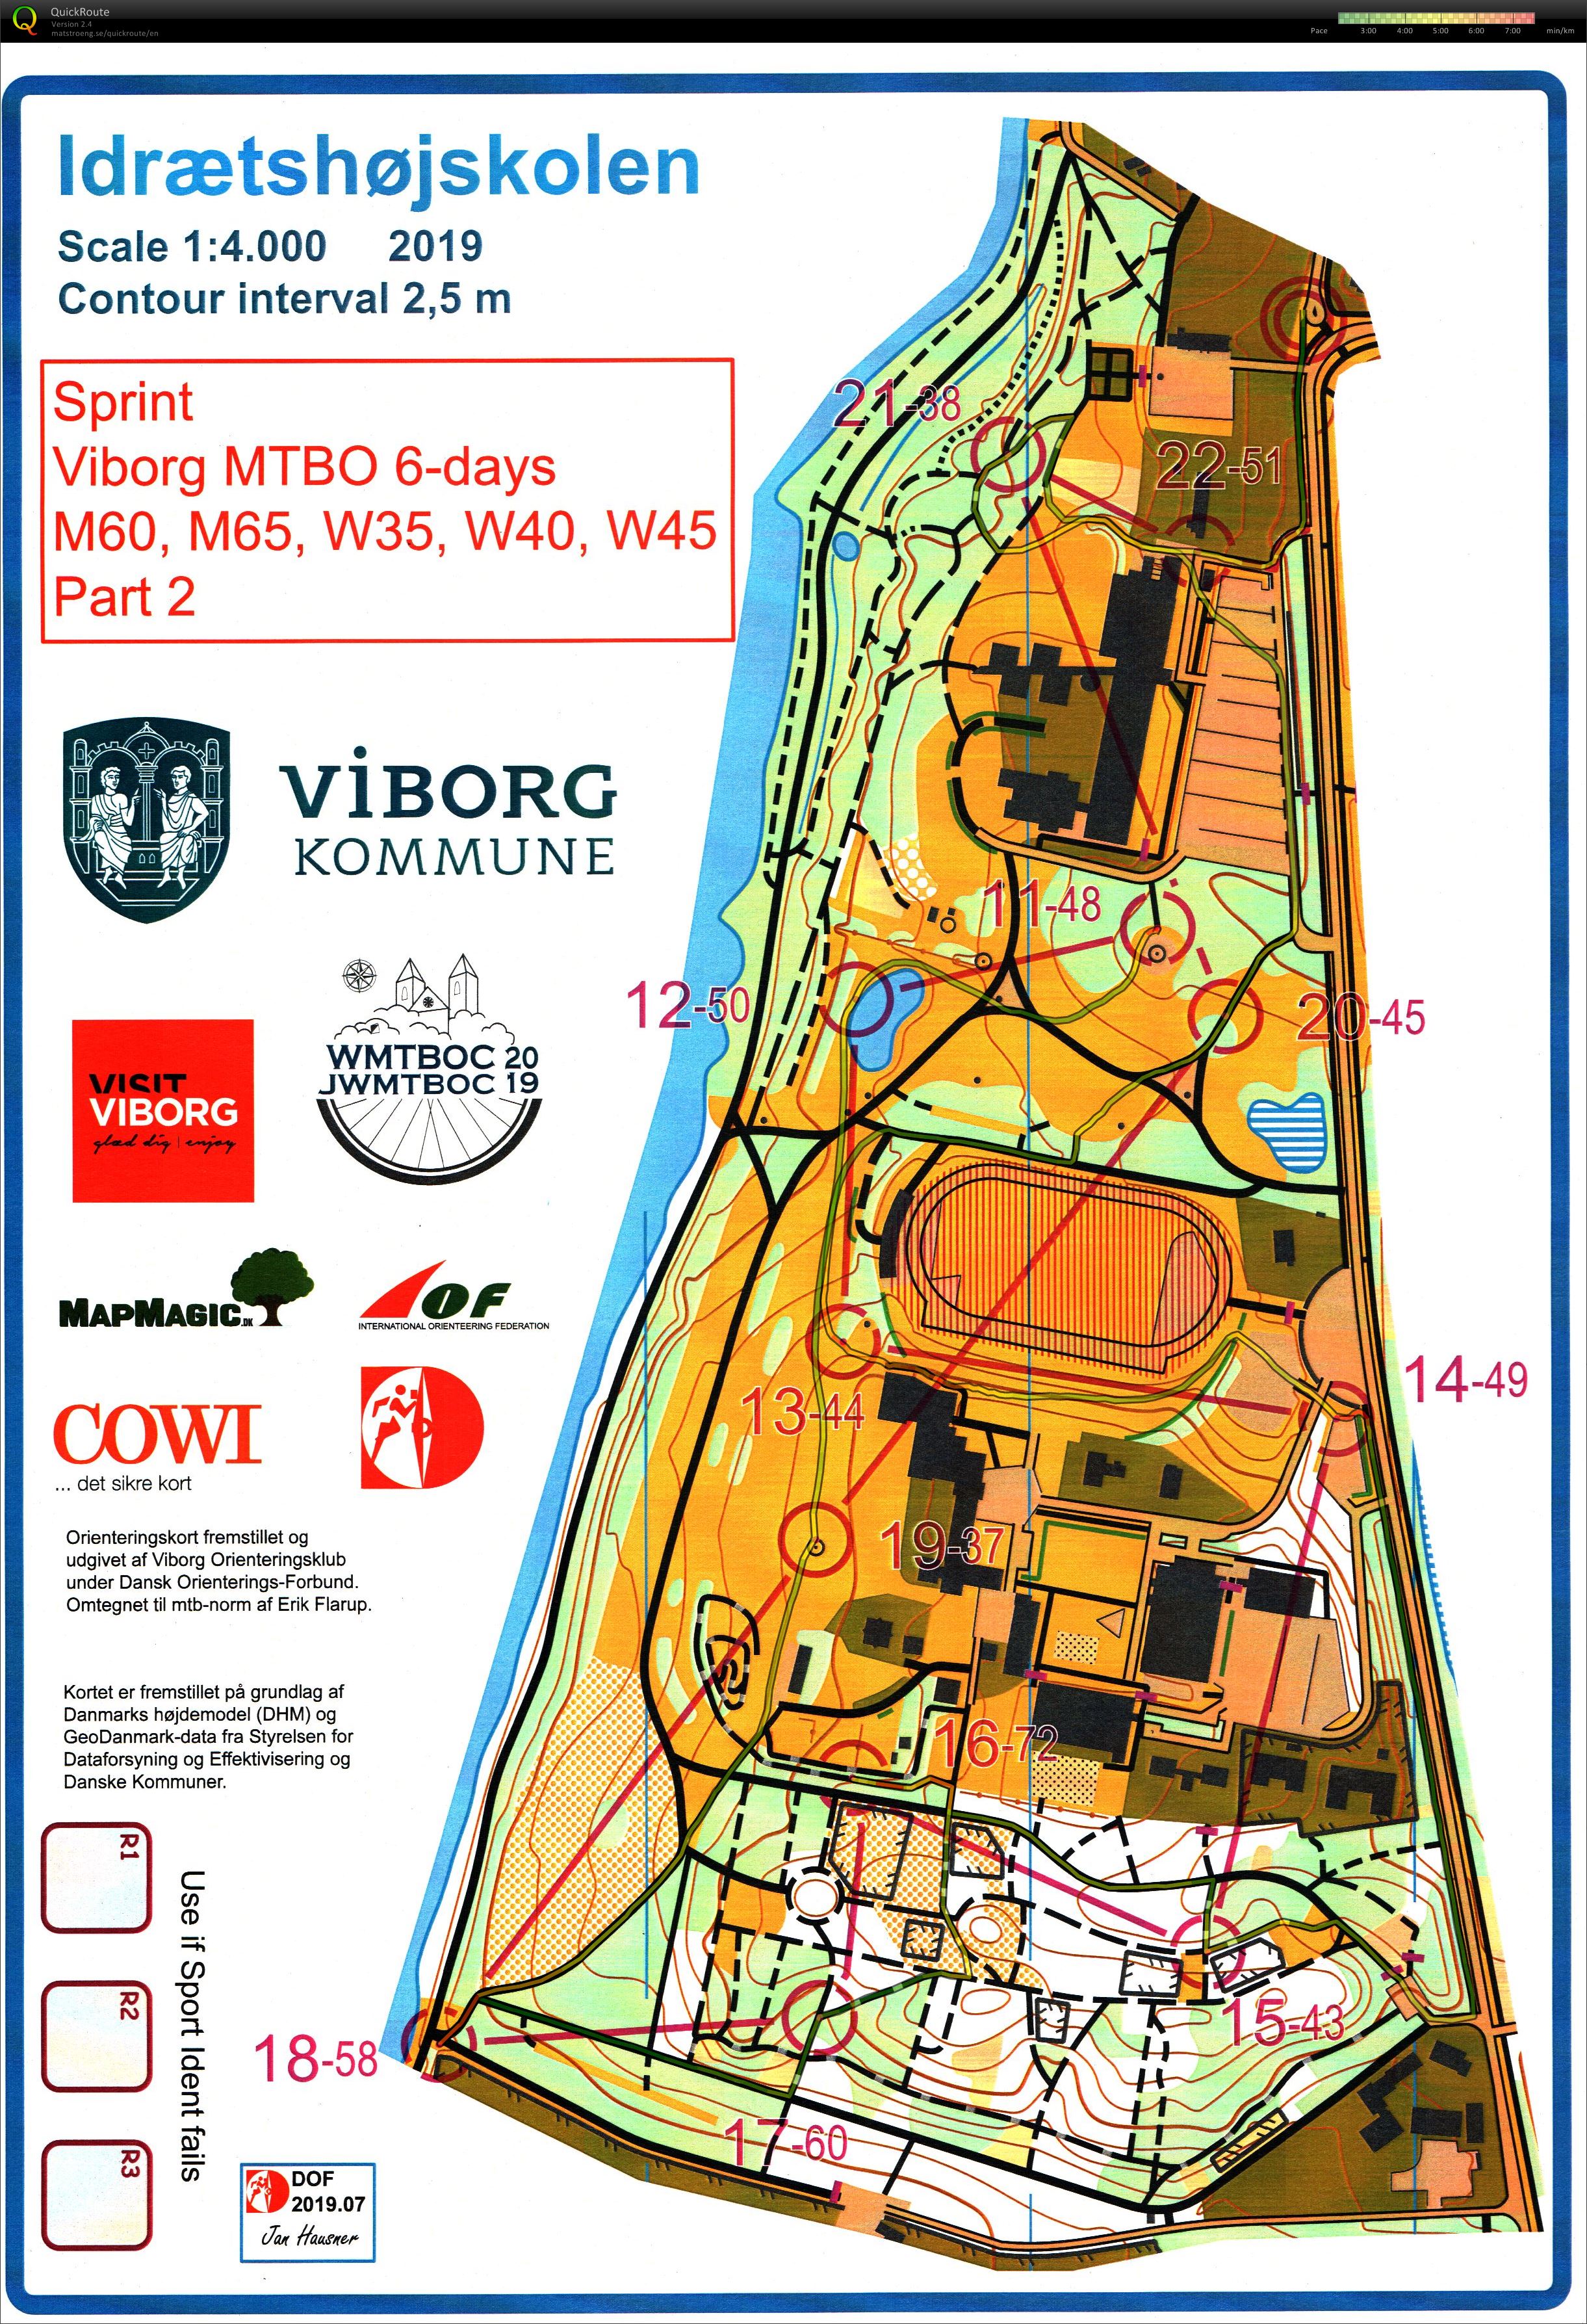 Viborg MTBO 6 days - Stage 1 (28/07/2019)